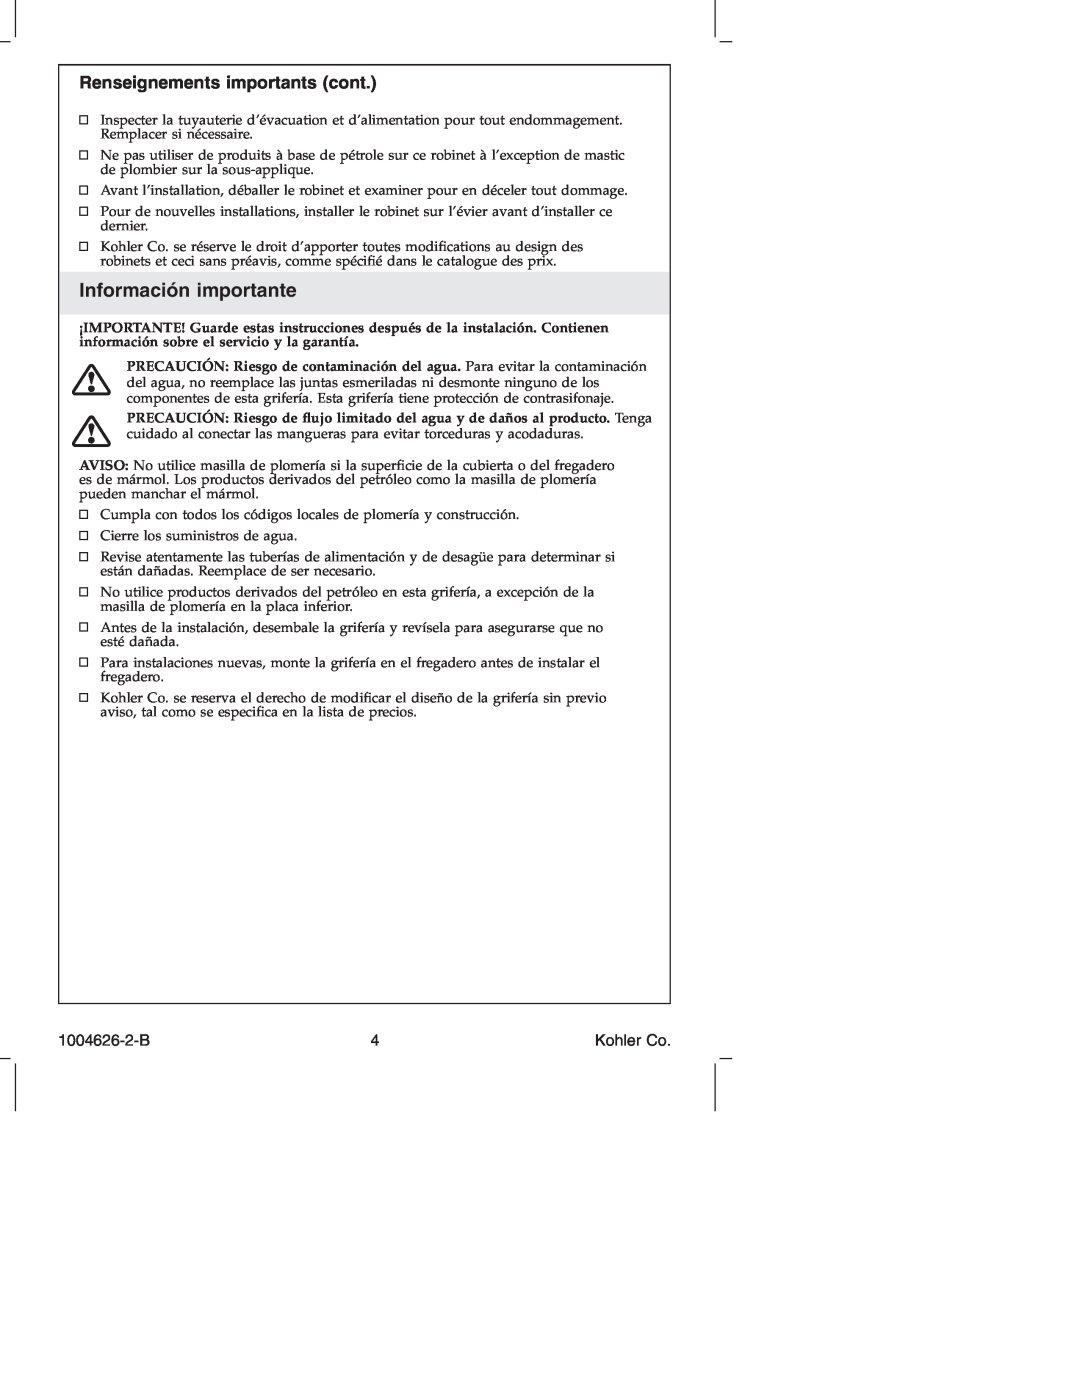 Kohler K-12177 manual Información importante, Renseignements importants cont, 1004626-2-B 